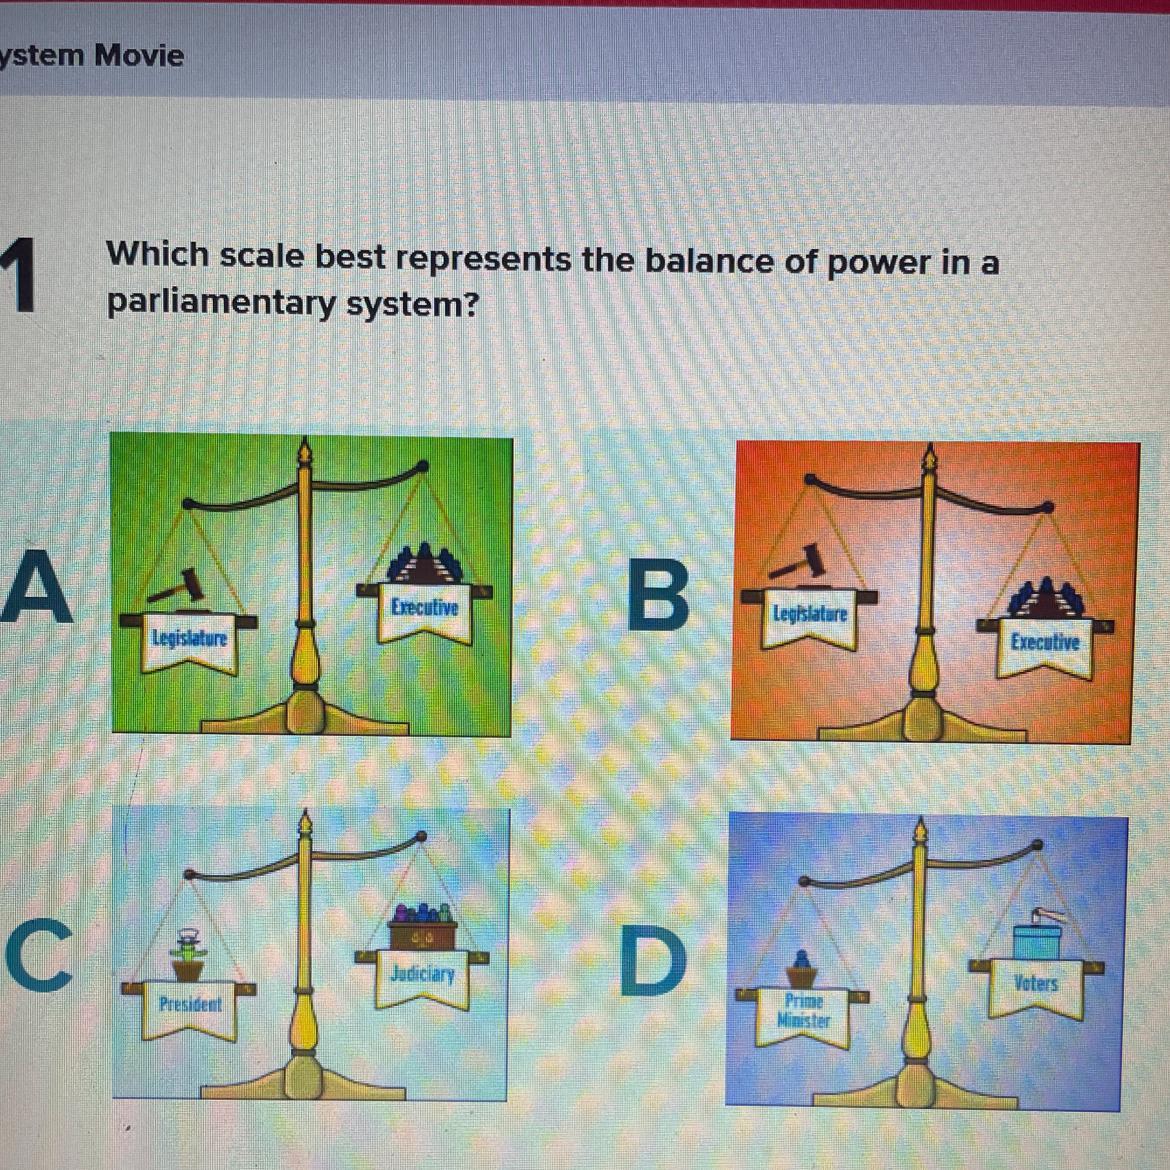 balance of power scale